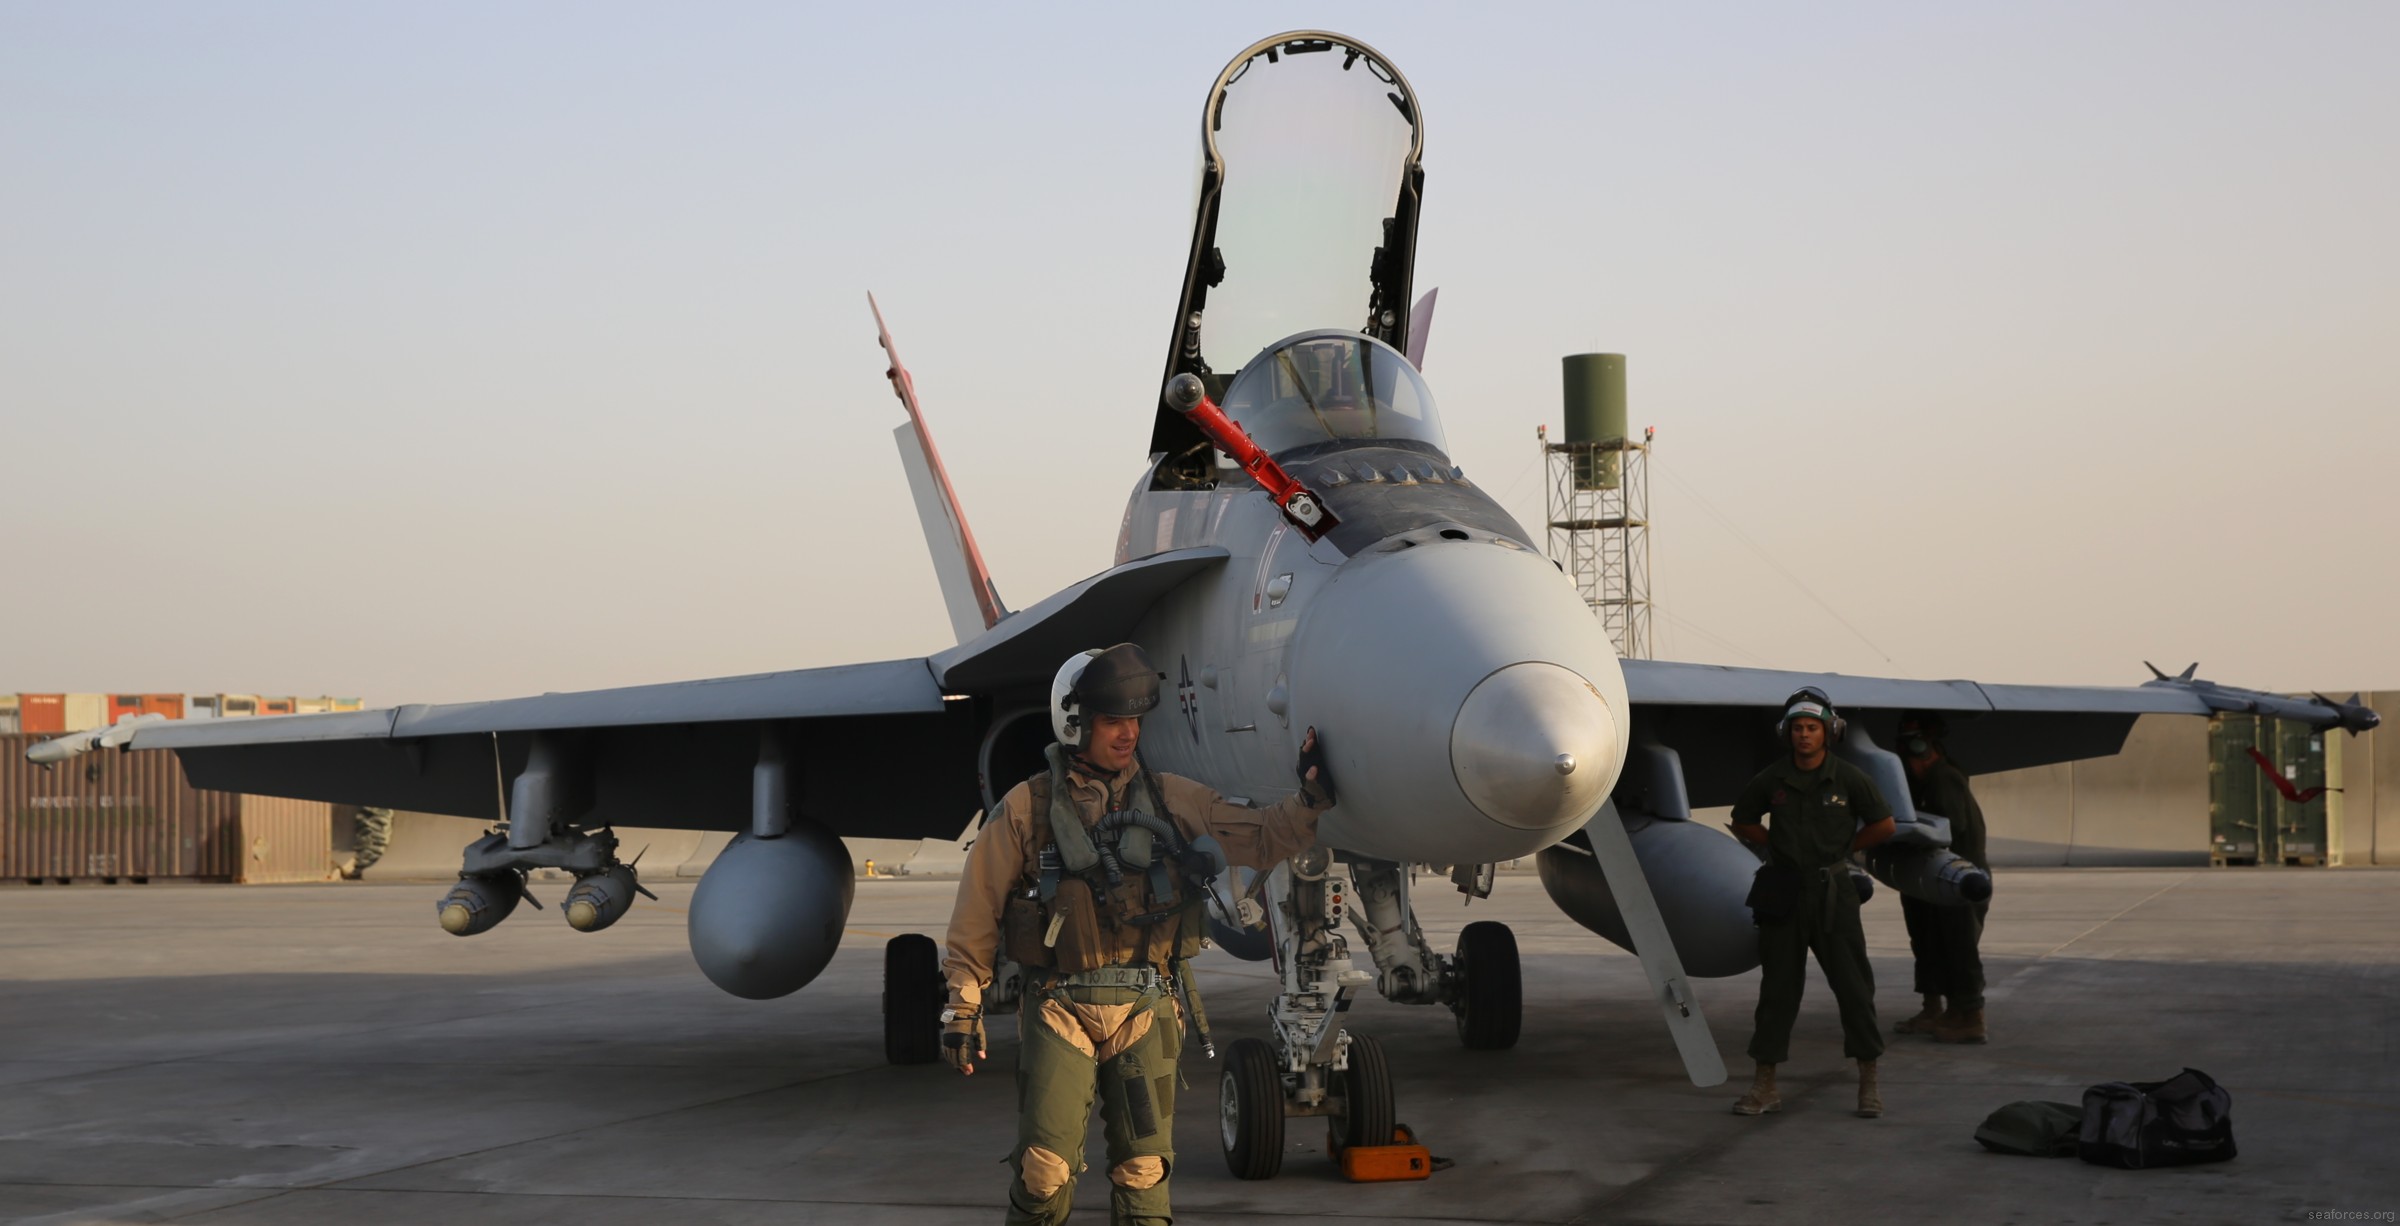 vmfa-232 red devils marine fighter attack squadron usmc f/a-18c hornet 128 afghanistan iraq